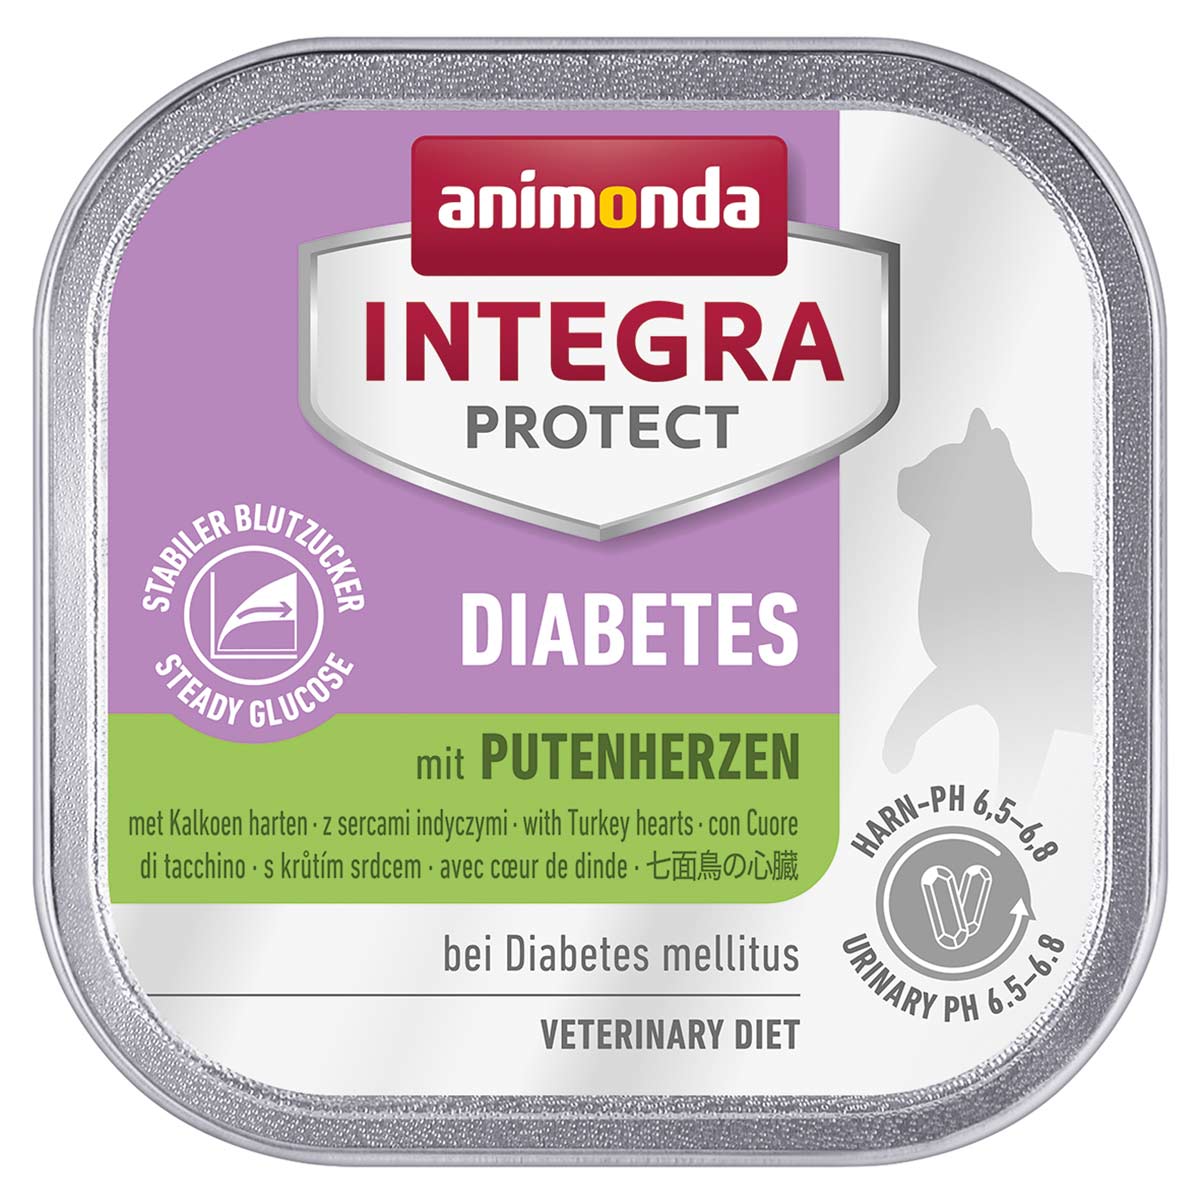 INTEGRA PROTECT Diabetes mit Putenherzen 16x100g